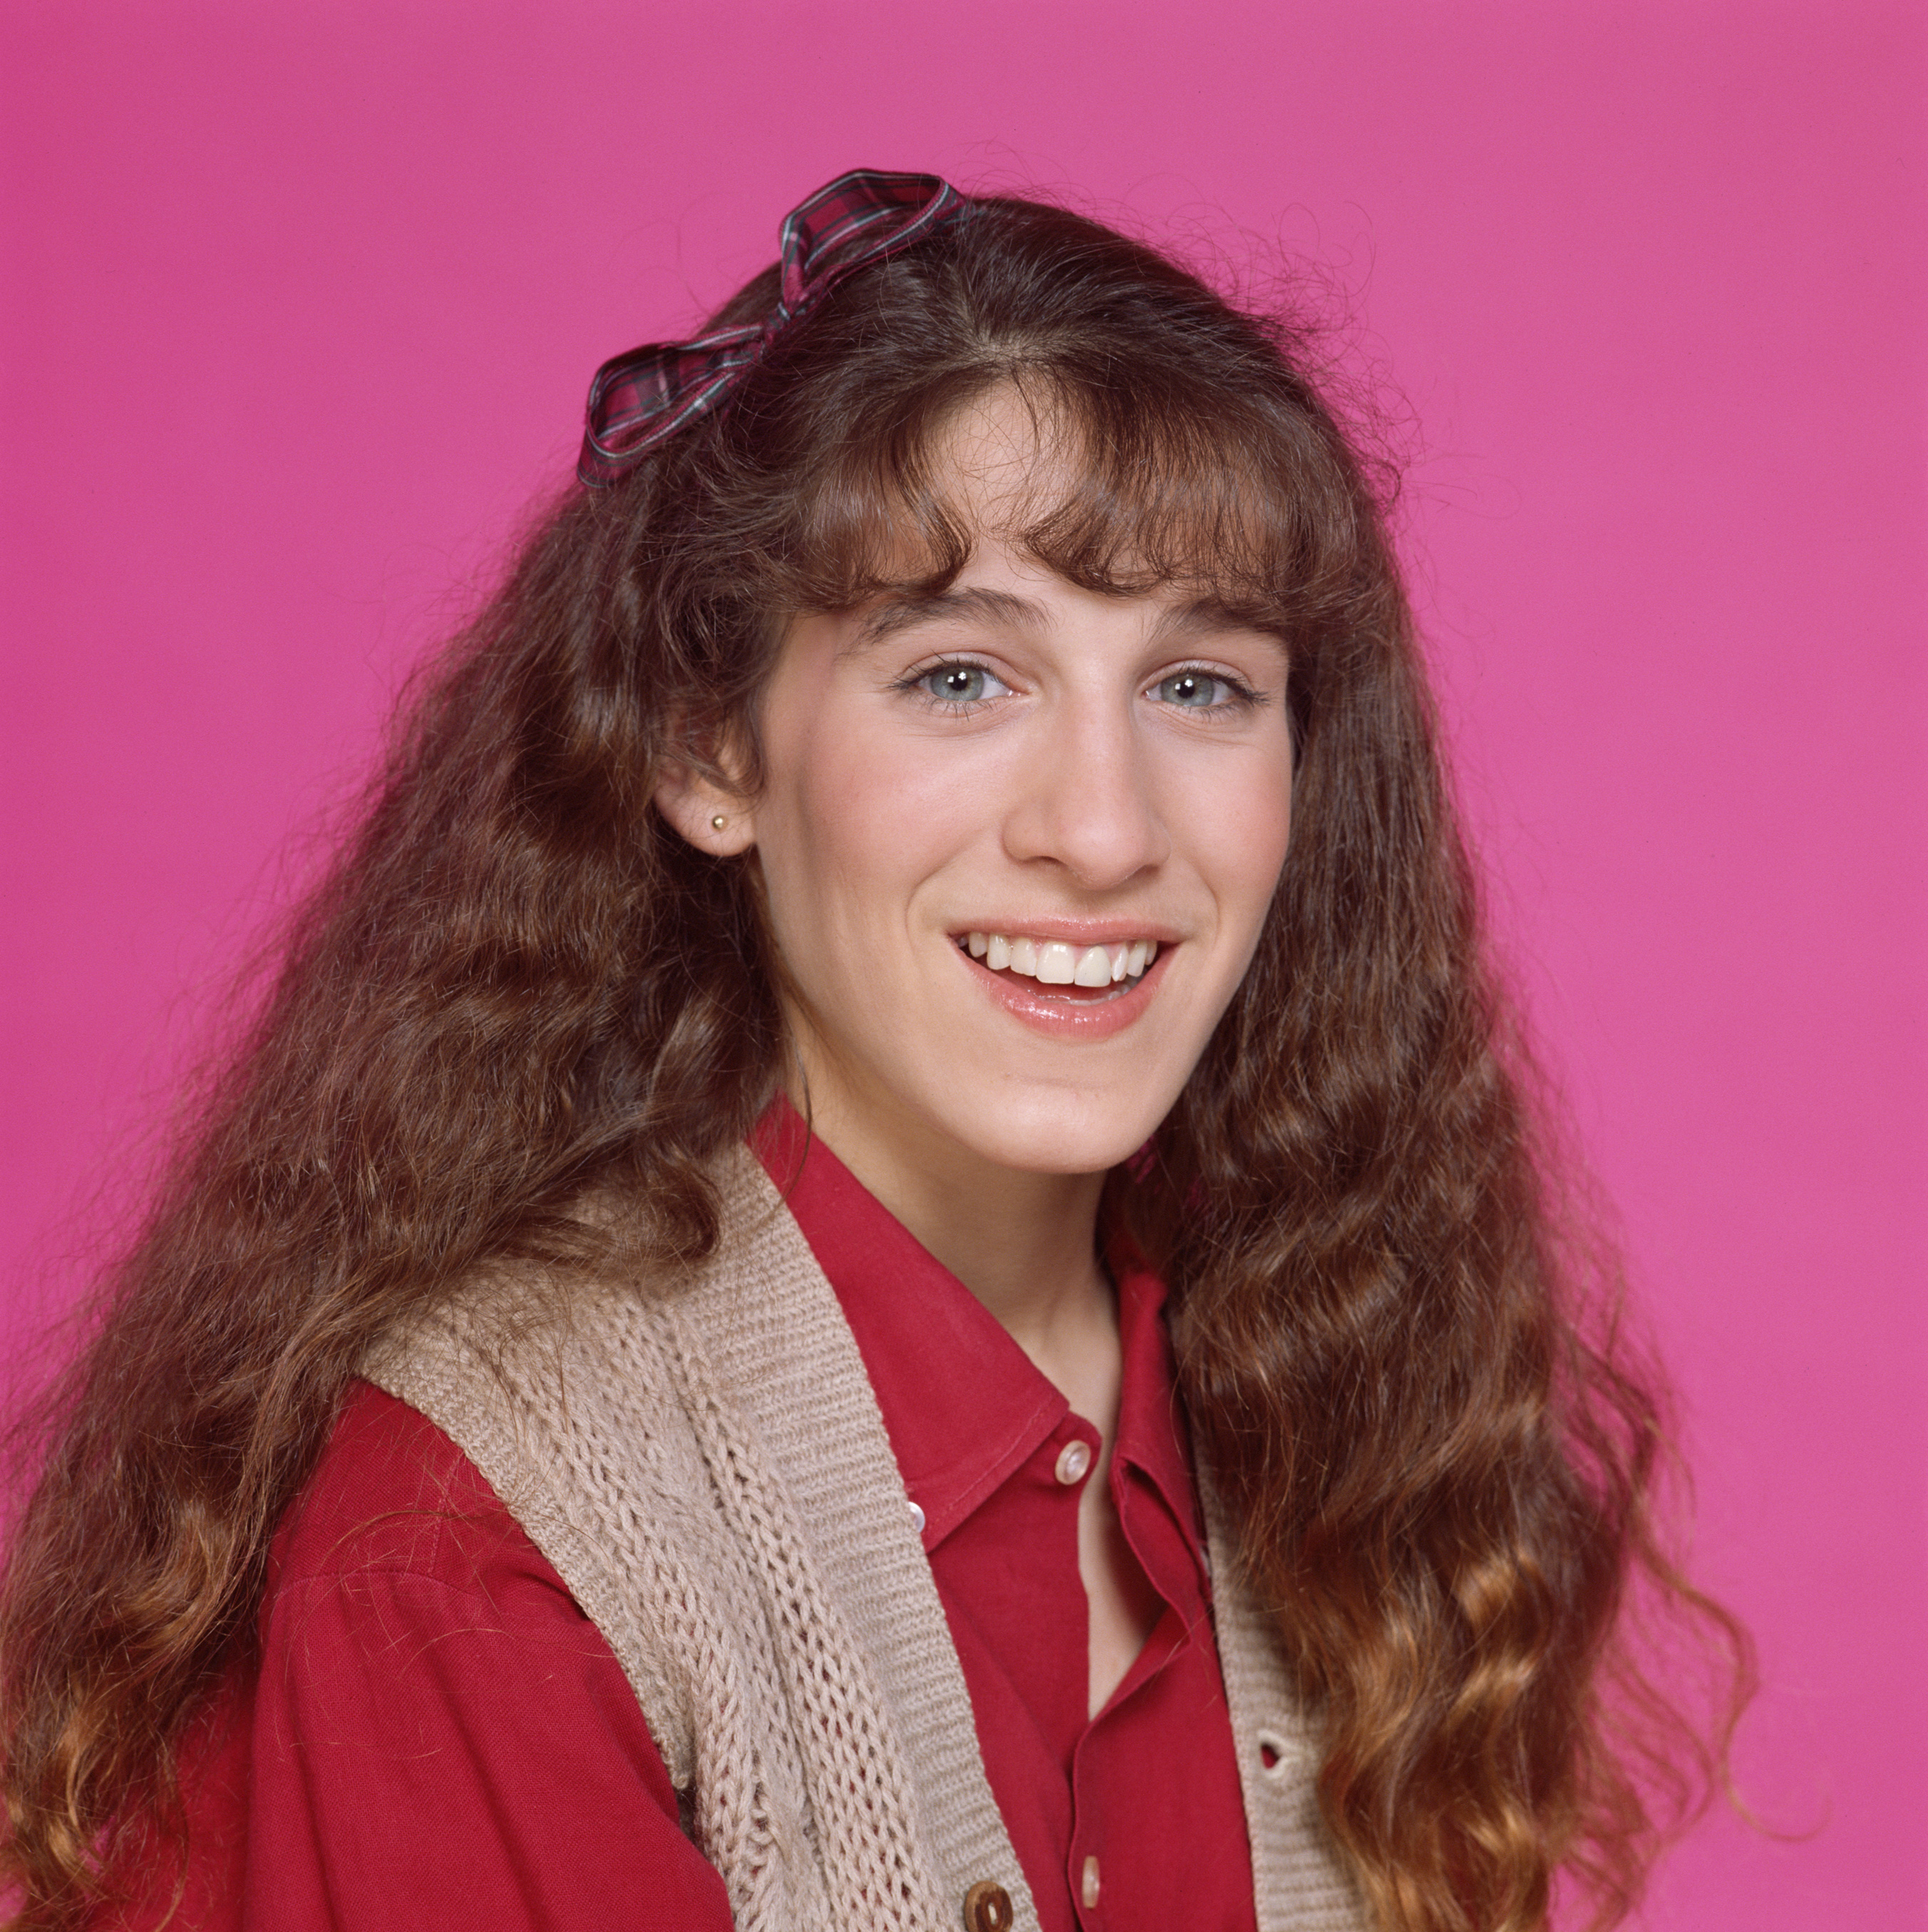 Sarah Jessica Parker in 1982